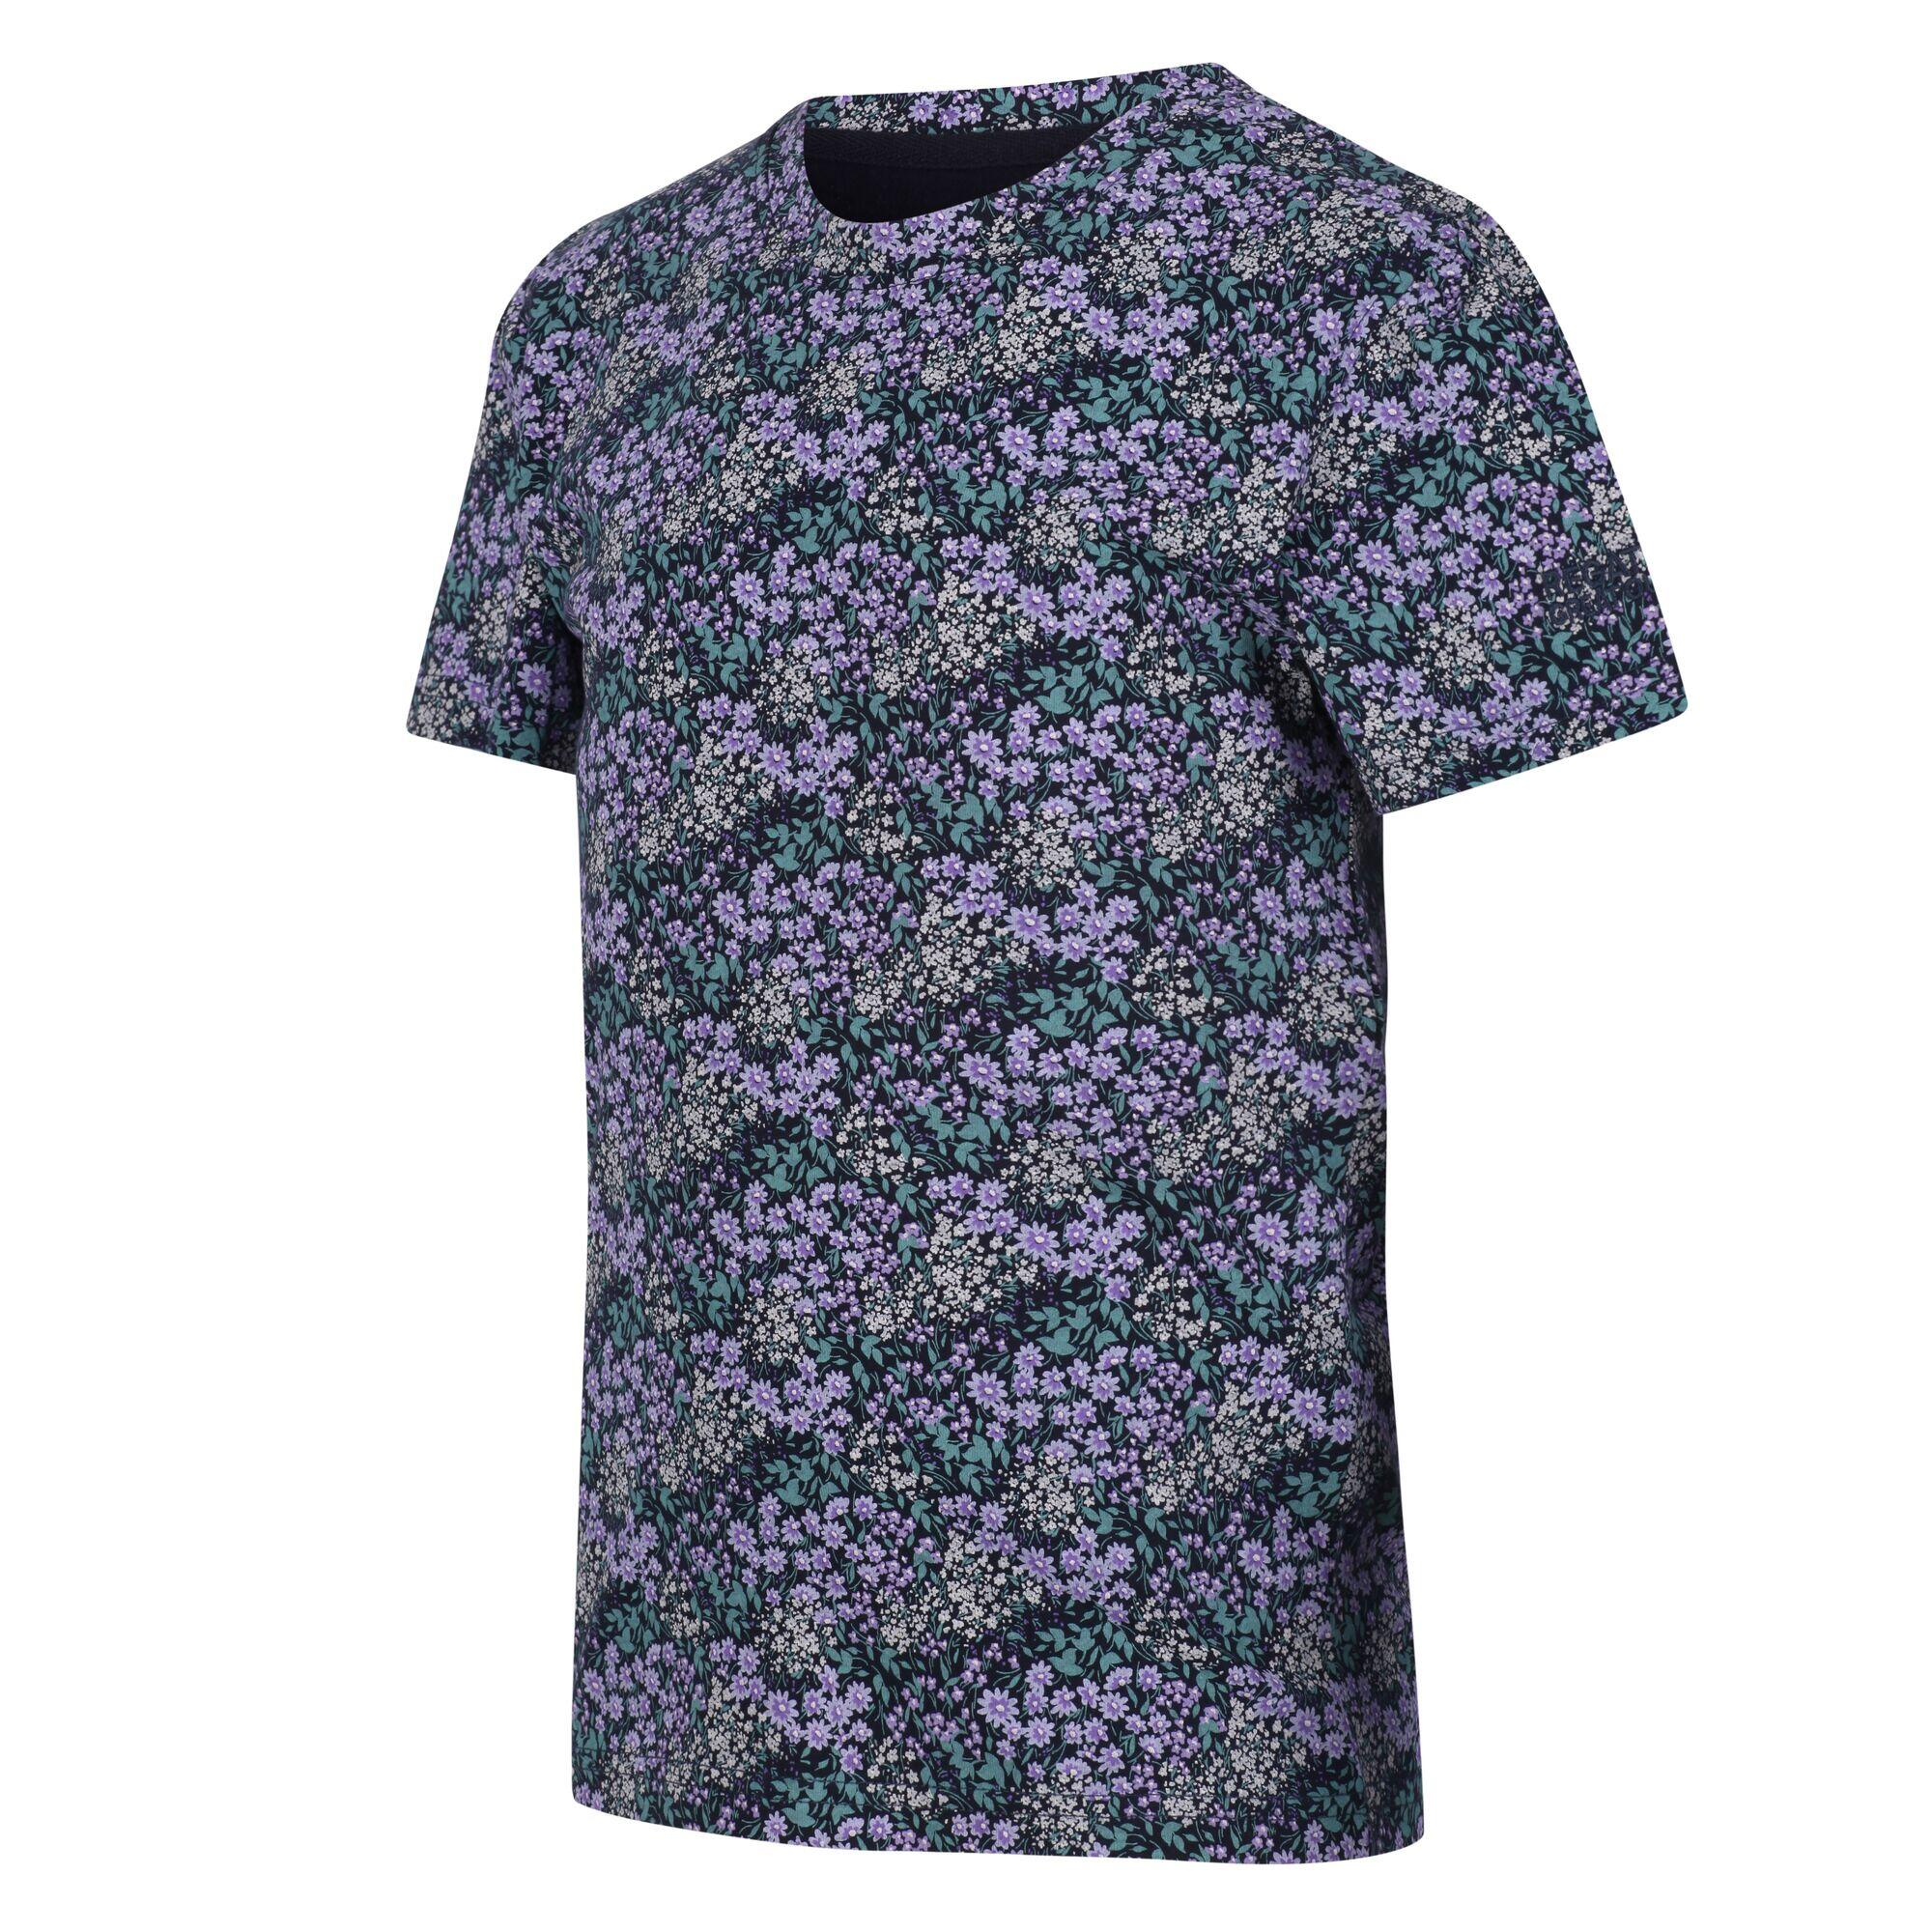 Bosley V Kids Walking Short Sleeve T-Shirt - Navy Ditsy Floral 4/5